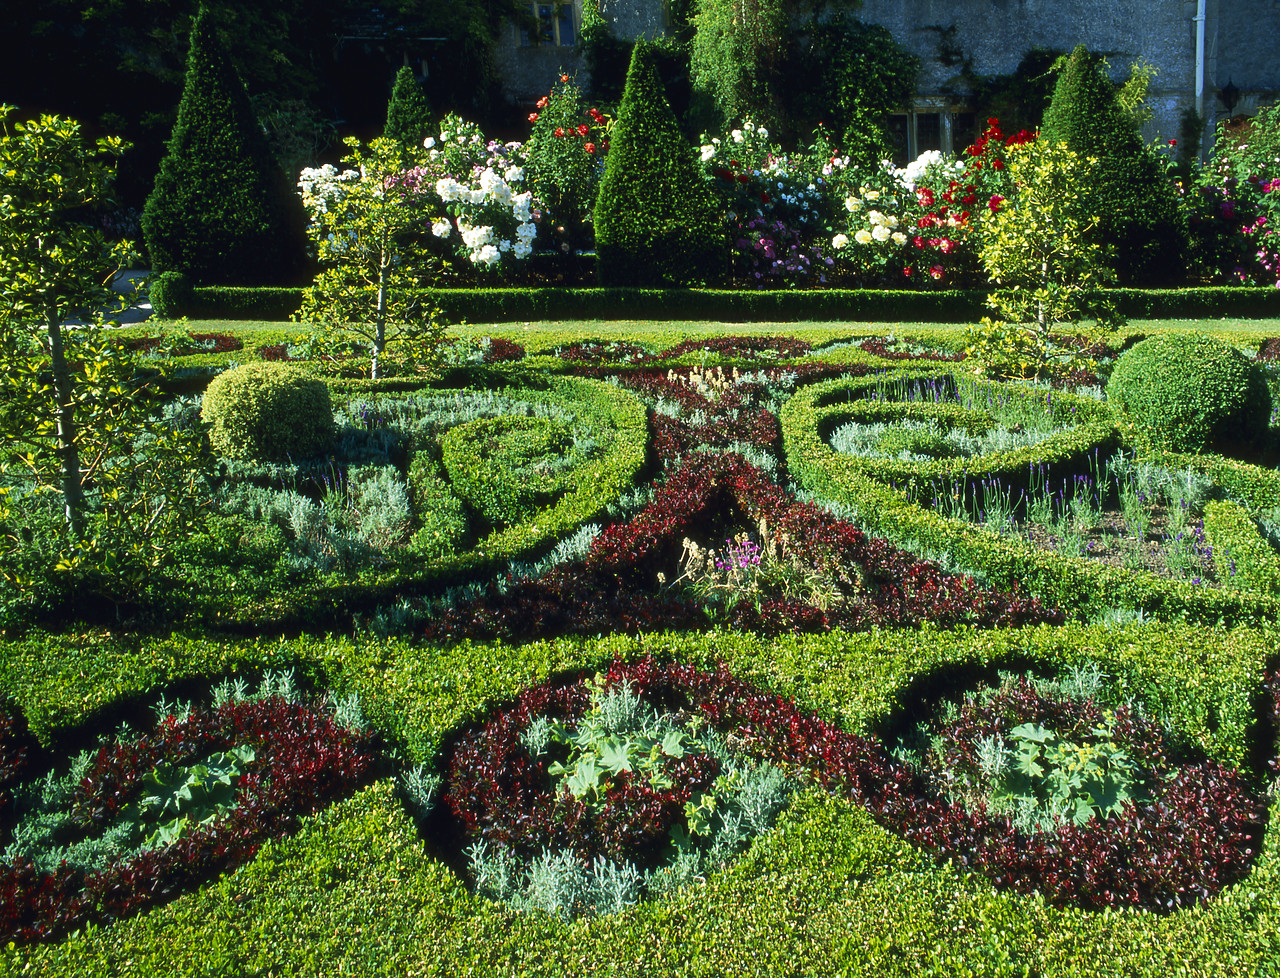 #030215-1 - Abbey Gardens, Malmesbury, Wiltshire, England